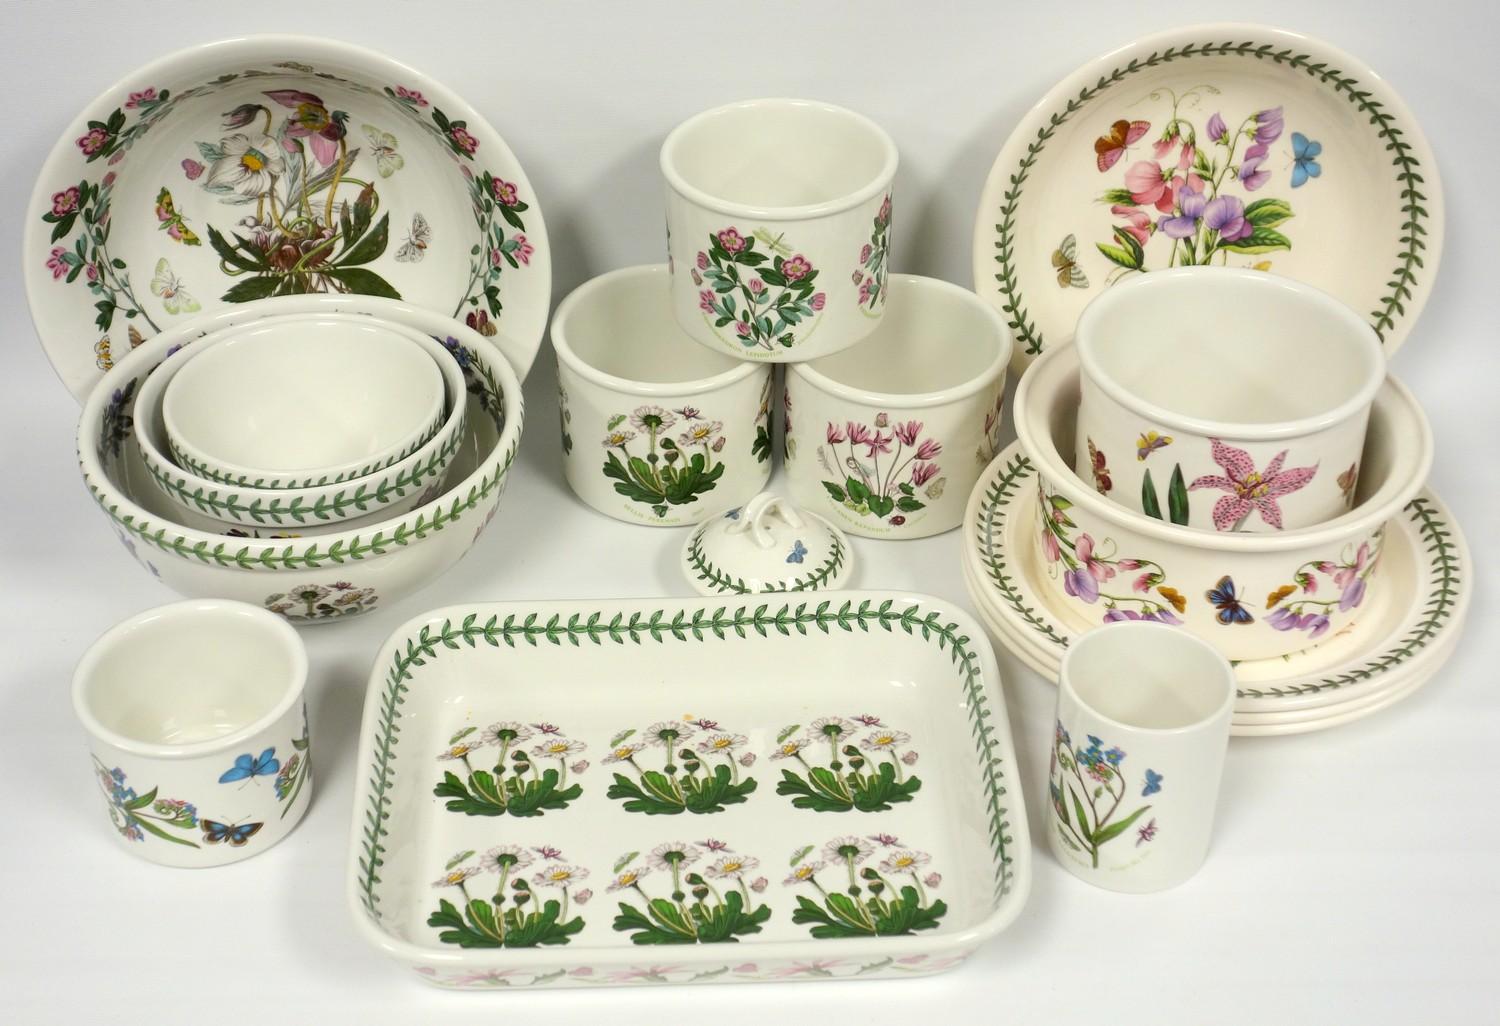 Large quantity of Portmeirion, Botanic garden, including serving dishes, bowls, plates, tea set, - Image 3 of 4